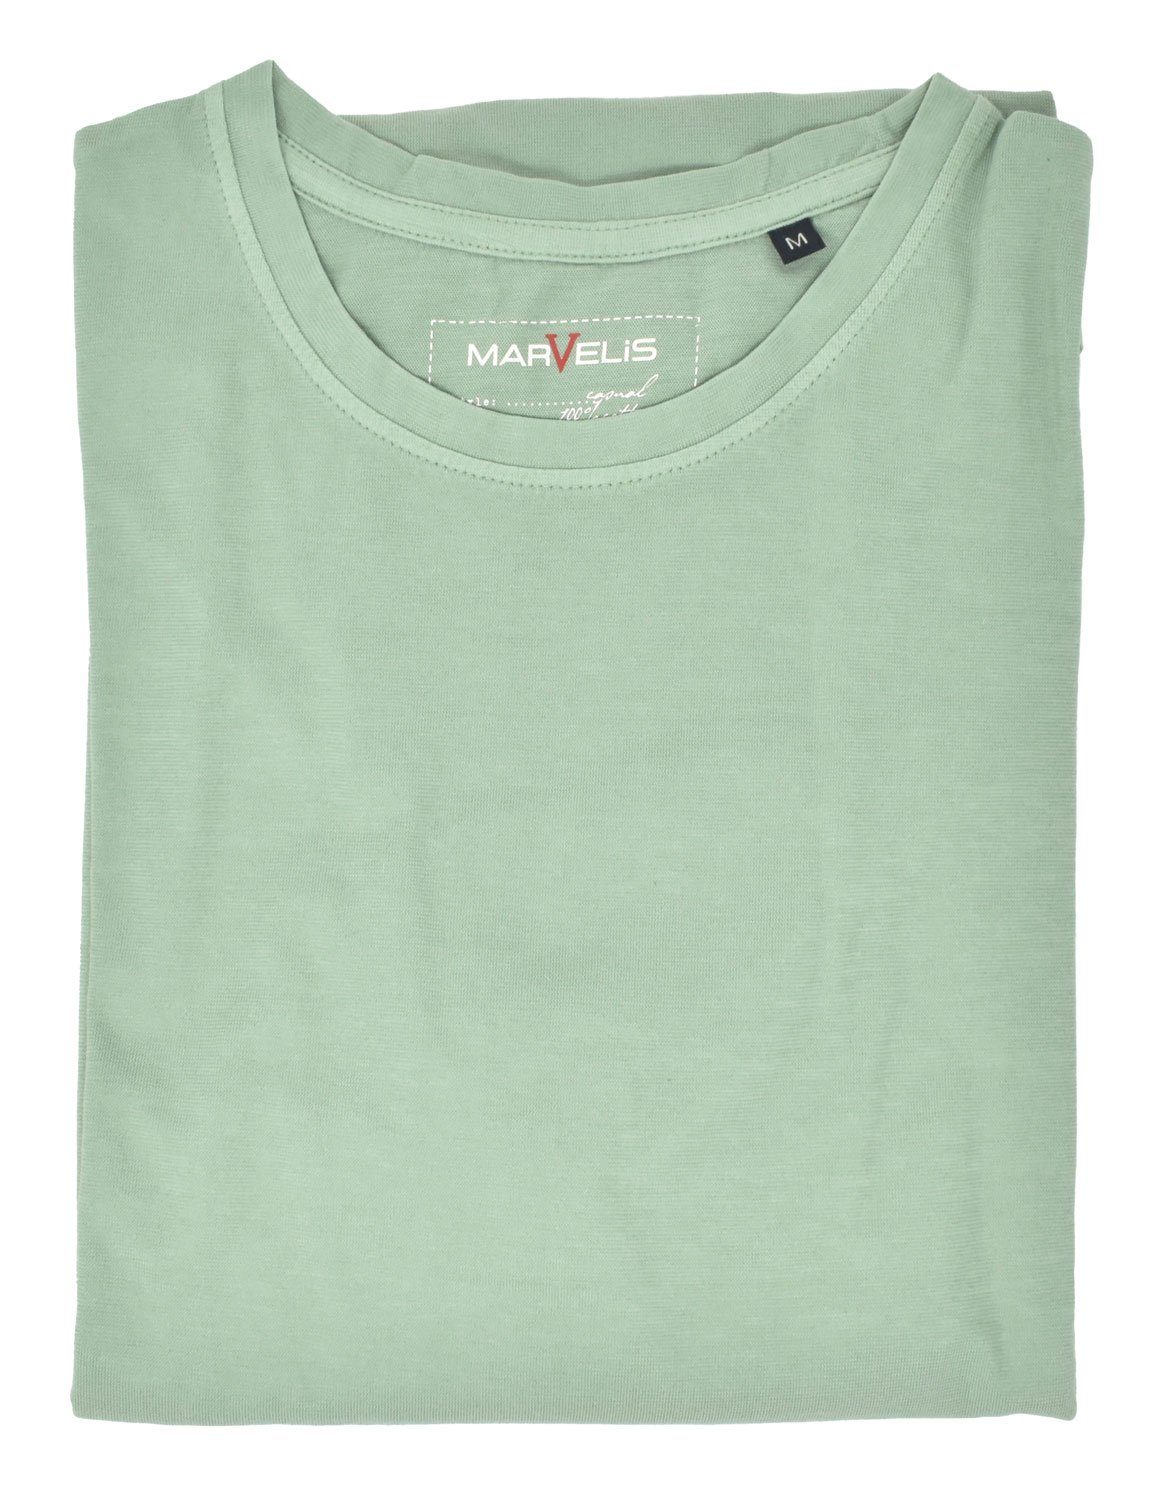 MARVELIS T-Shirt Hellgrün - Fit Casual - - Rundhals Einfarbig T-Shirt -